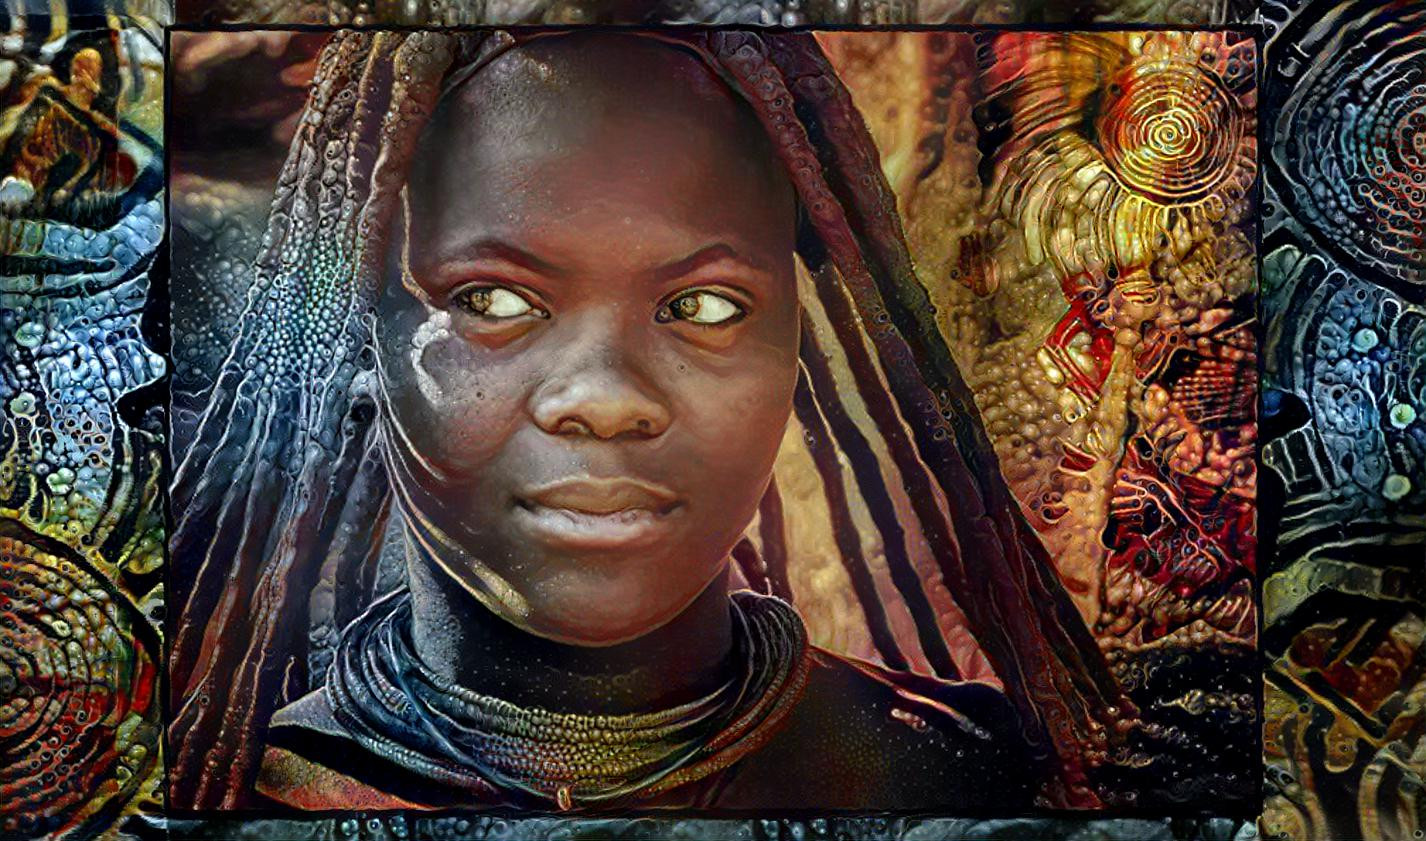 Young Himba girl of Namibia ...